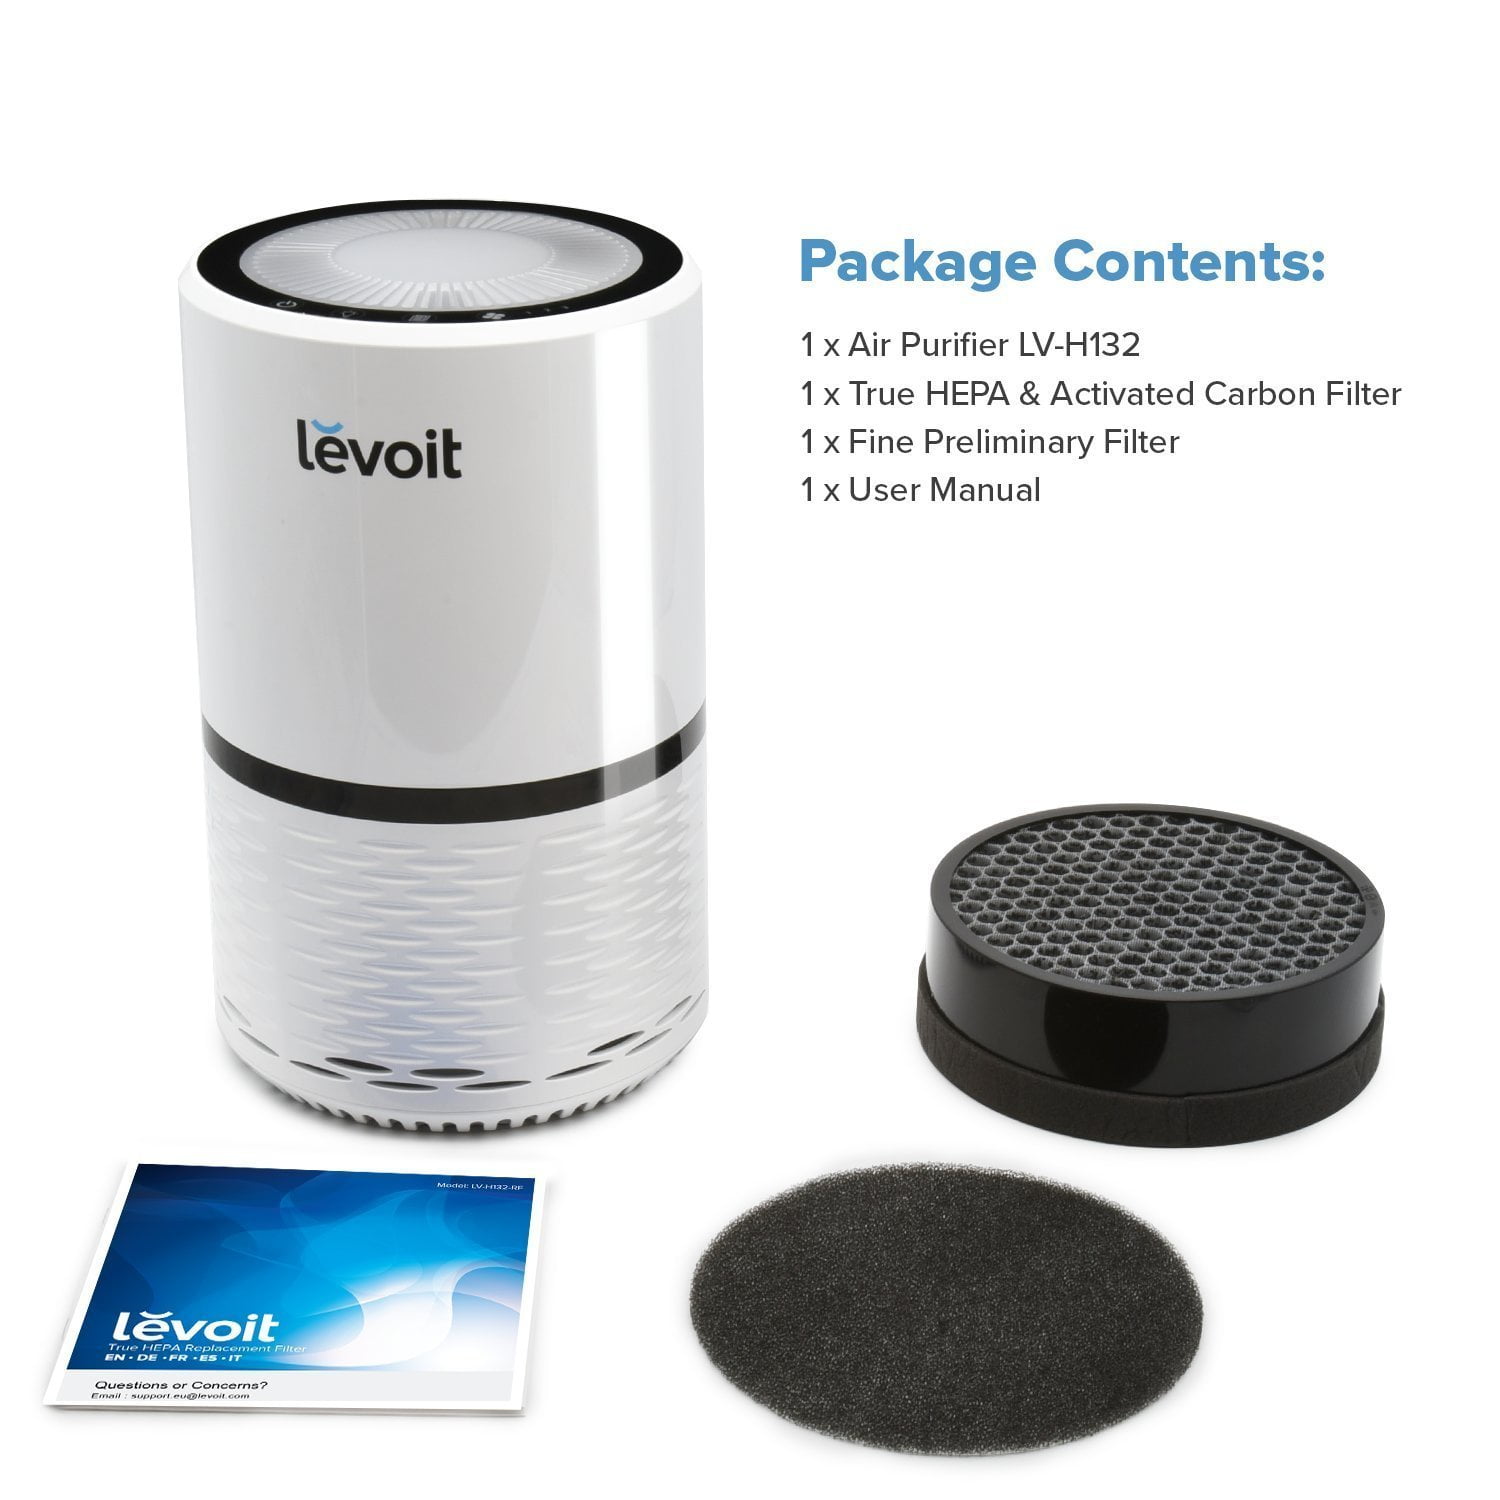 levoit compact air purifier model lv-h132